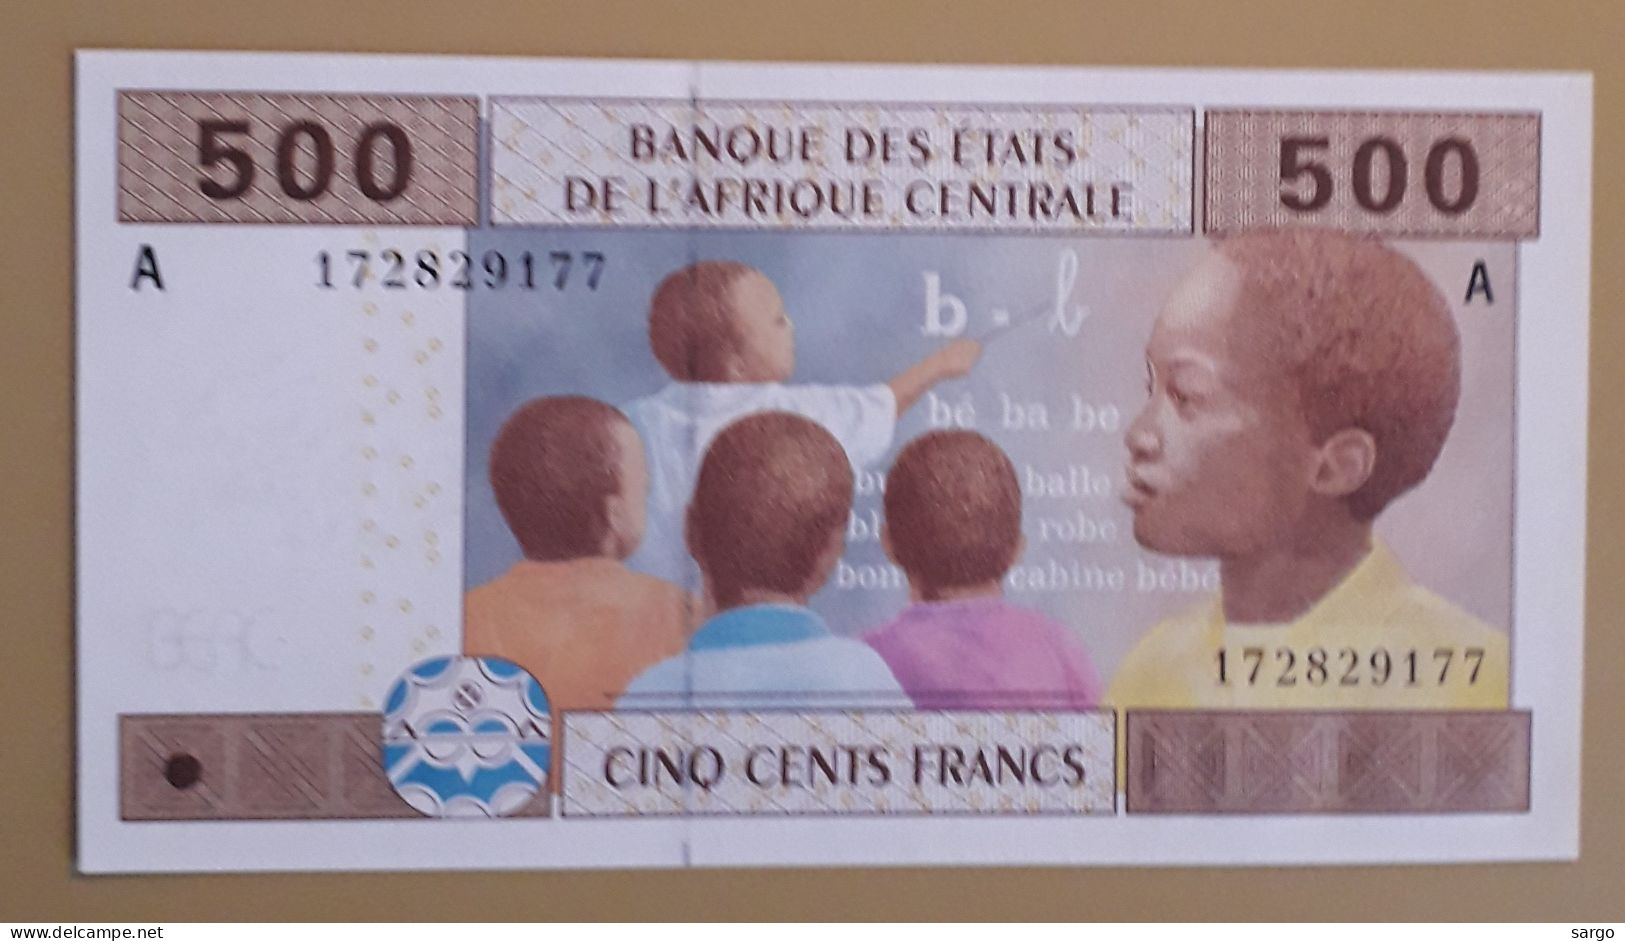 CENTRAL AFRICAN STATE - GABON - 500 FRANCS - 2002 - 2021 - UNCIRC - P 06 - BANKNOTES - PAPER MONEY - CARTAMONETA - - Stati Centrafricani